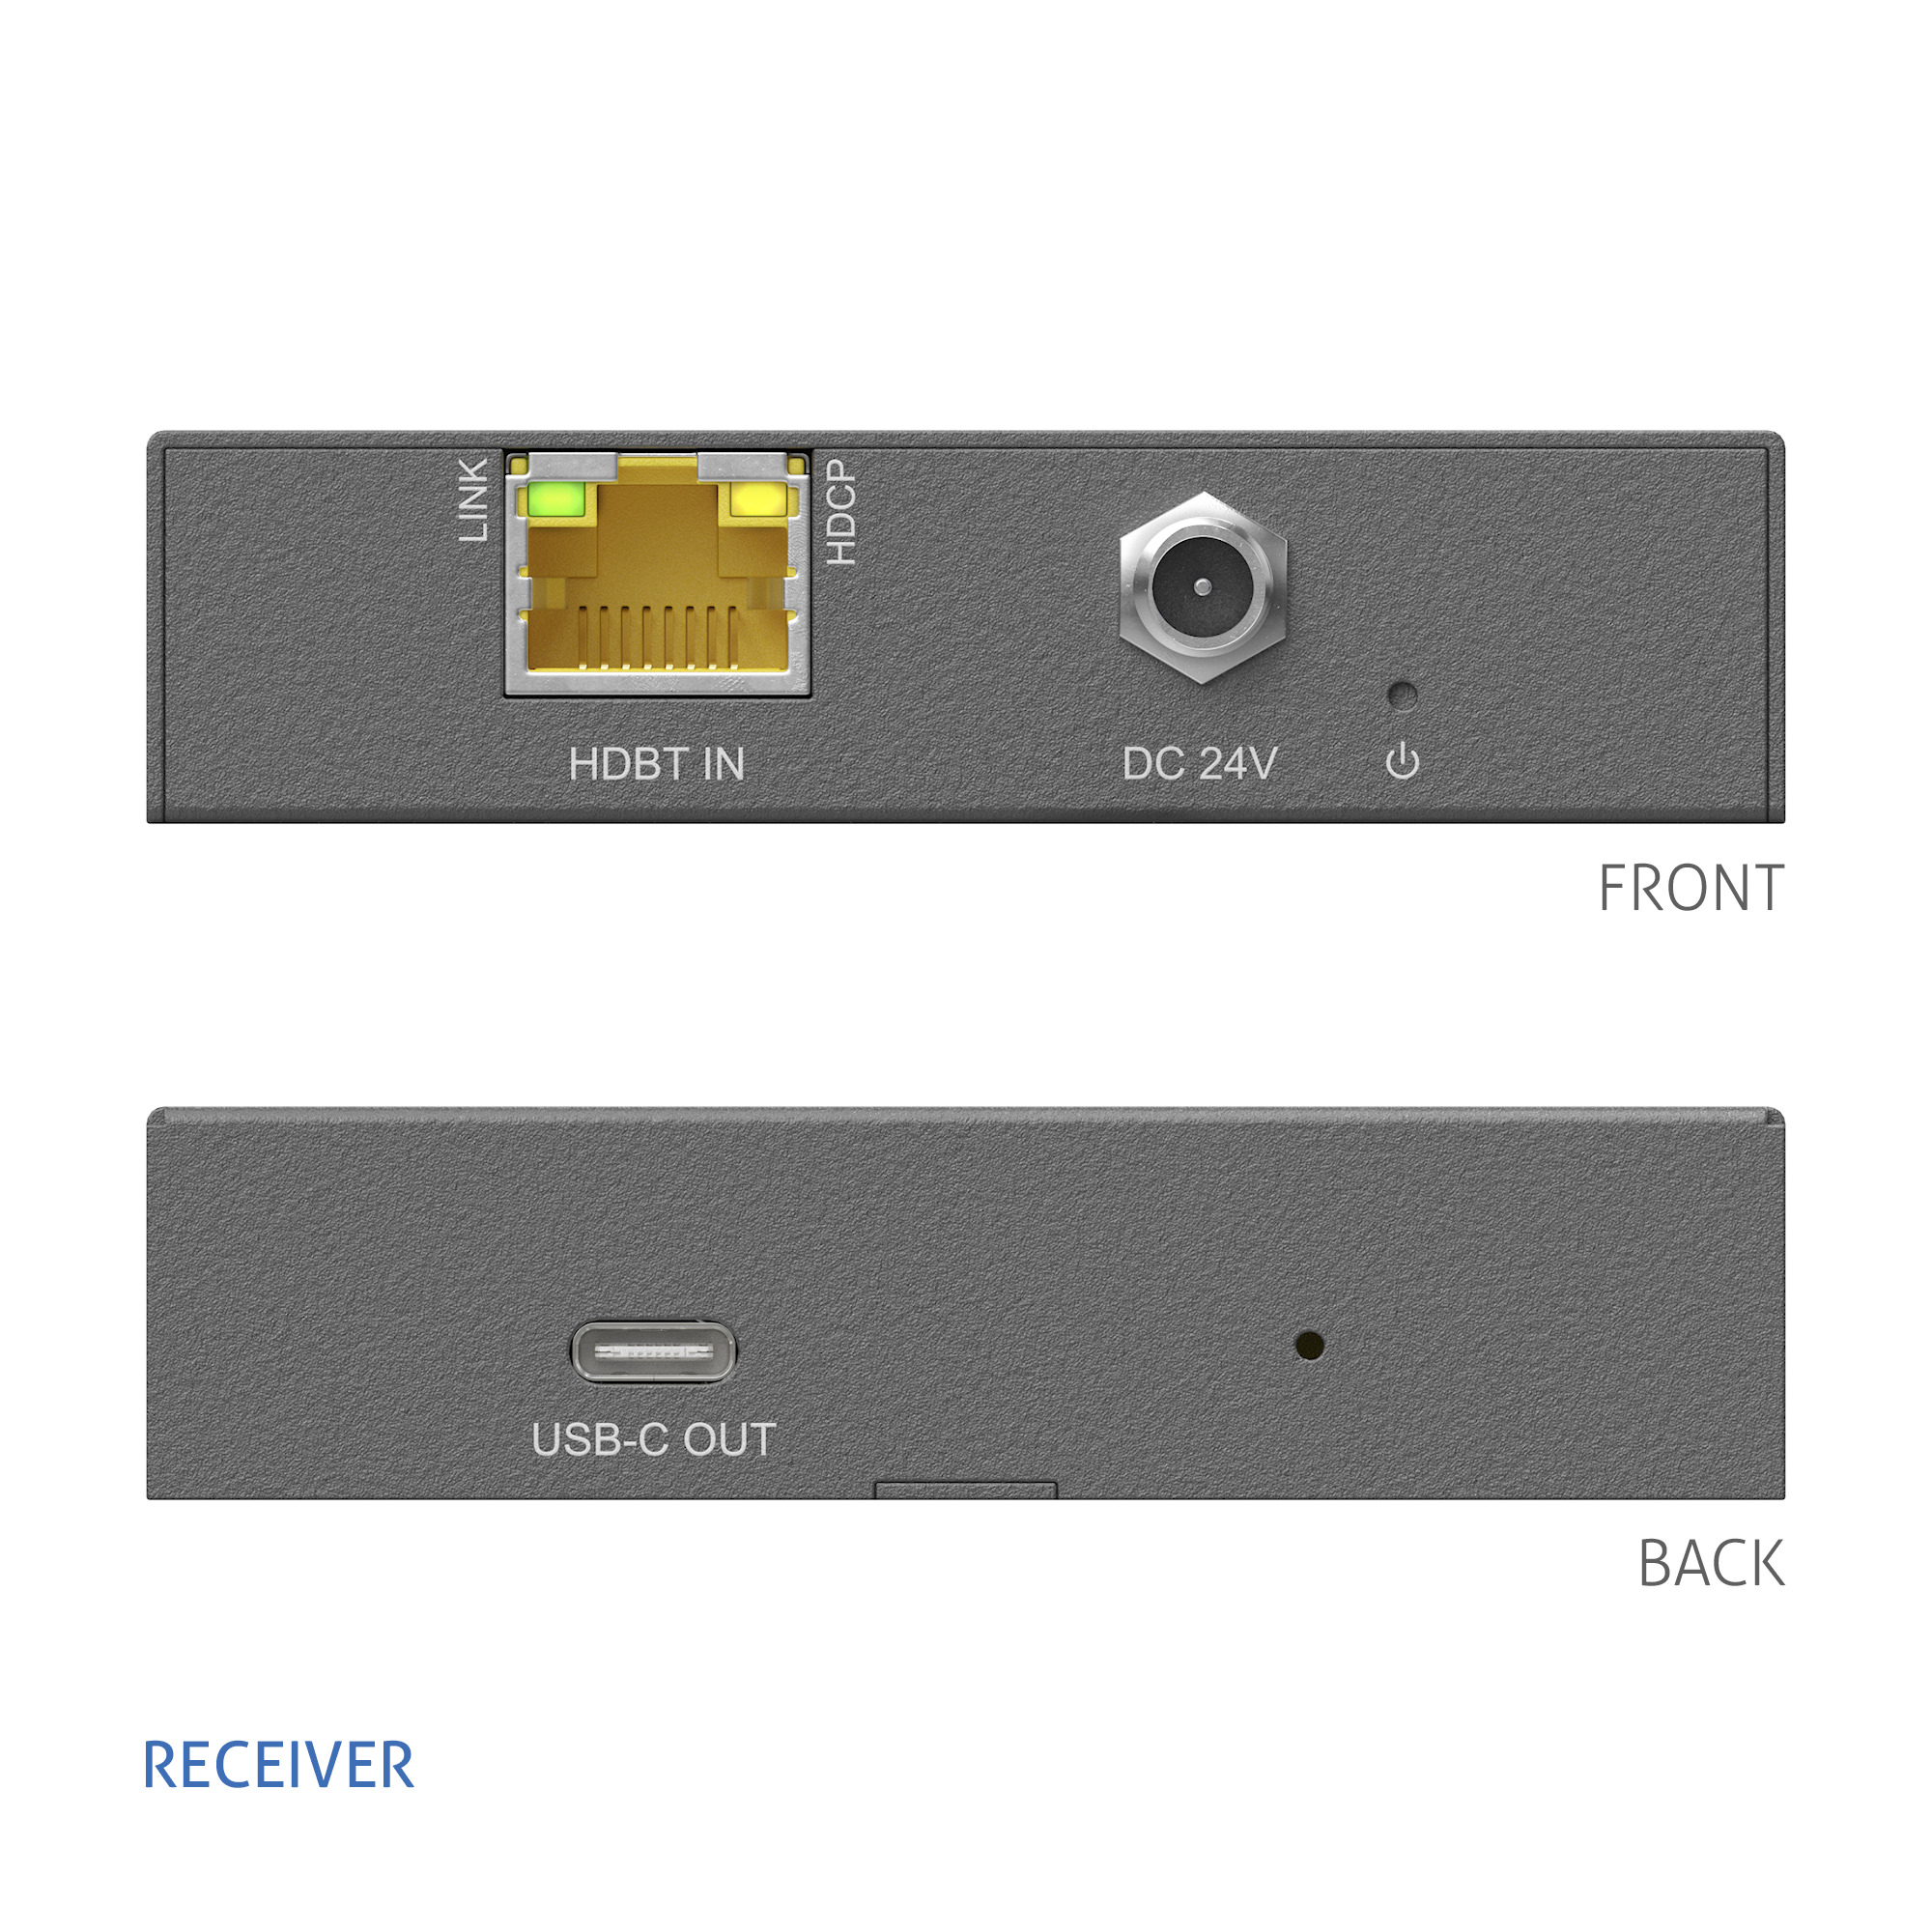 PureTools - HDBaseT USB-C Receiver - HDBaseT 3.0 - 4K